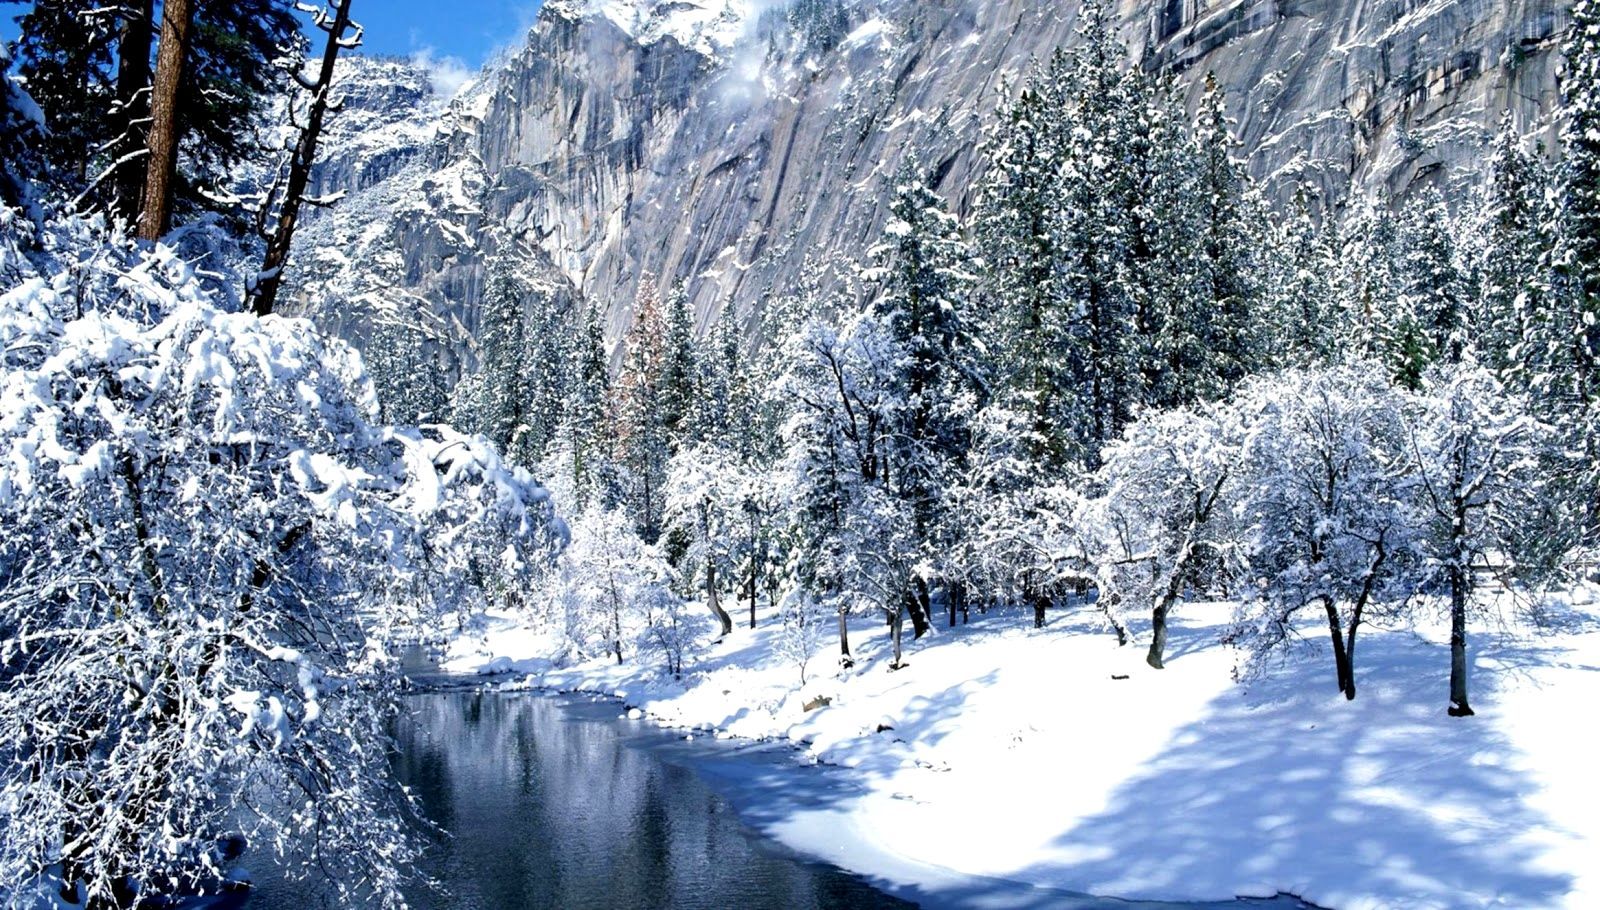 Winter Scenes Wallpaper Free Gallery. Winter wallpaper desktop, Winter snow wallpaper, Landscape wallpaper